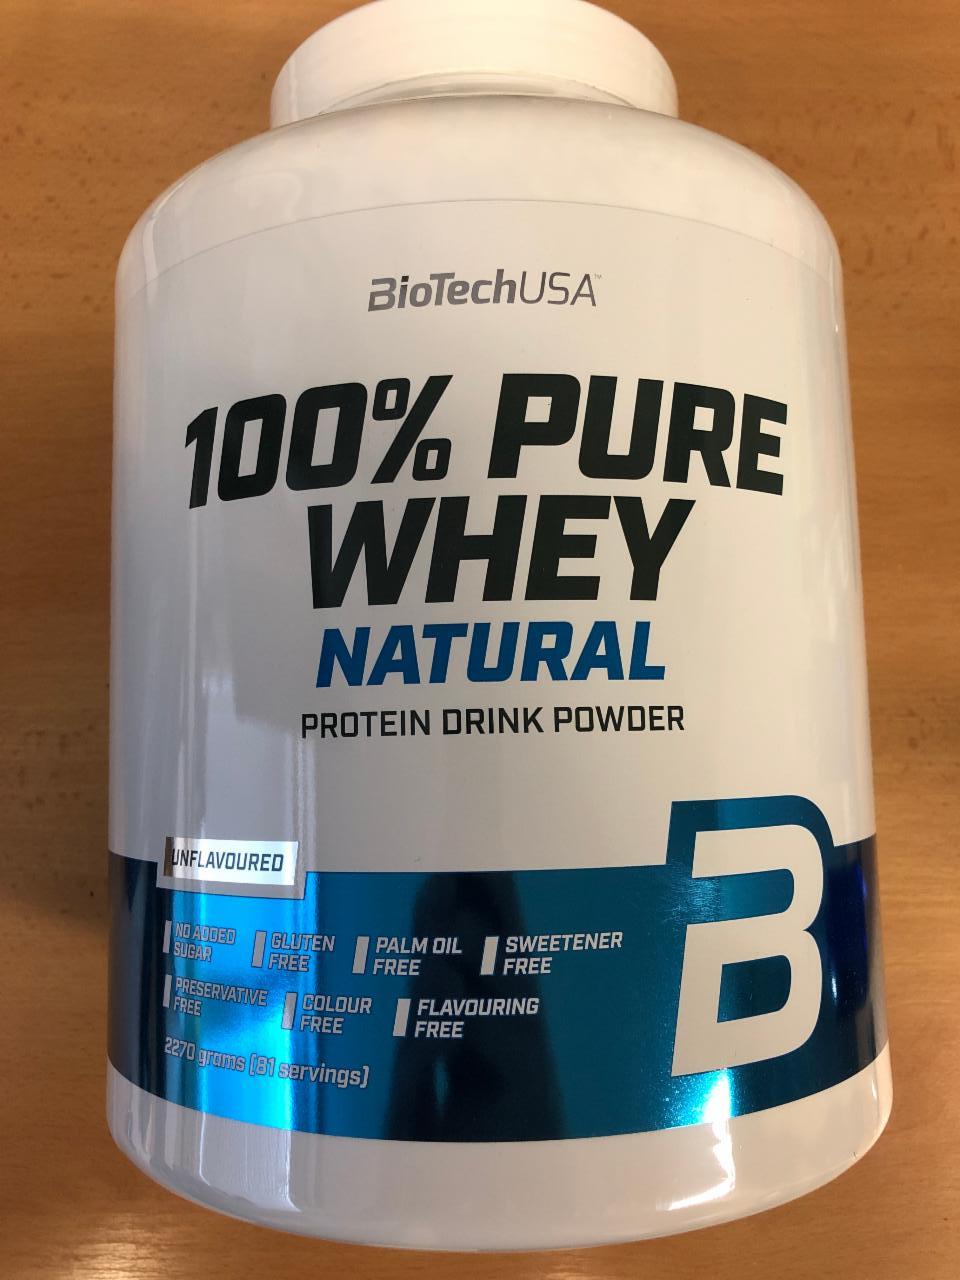 Fotografie - 100% pure whey natural protein drink powder unflavoured BioTechUSA